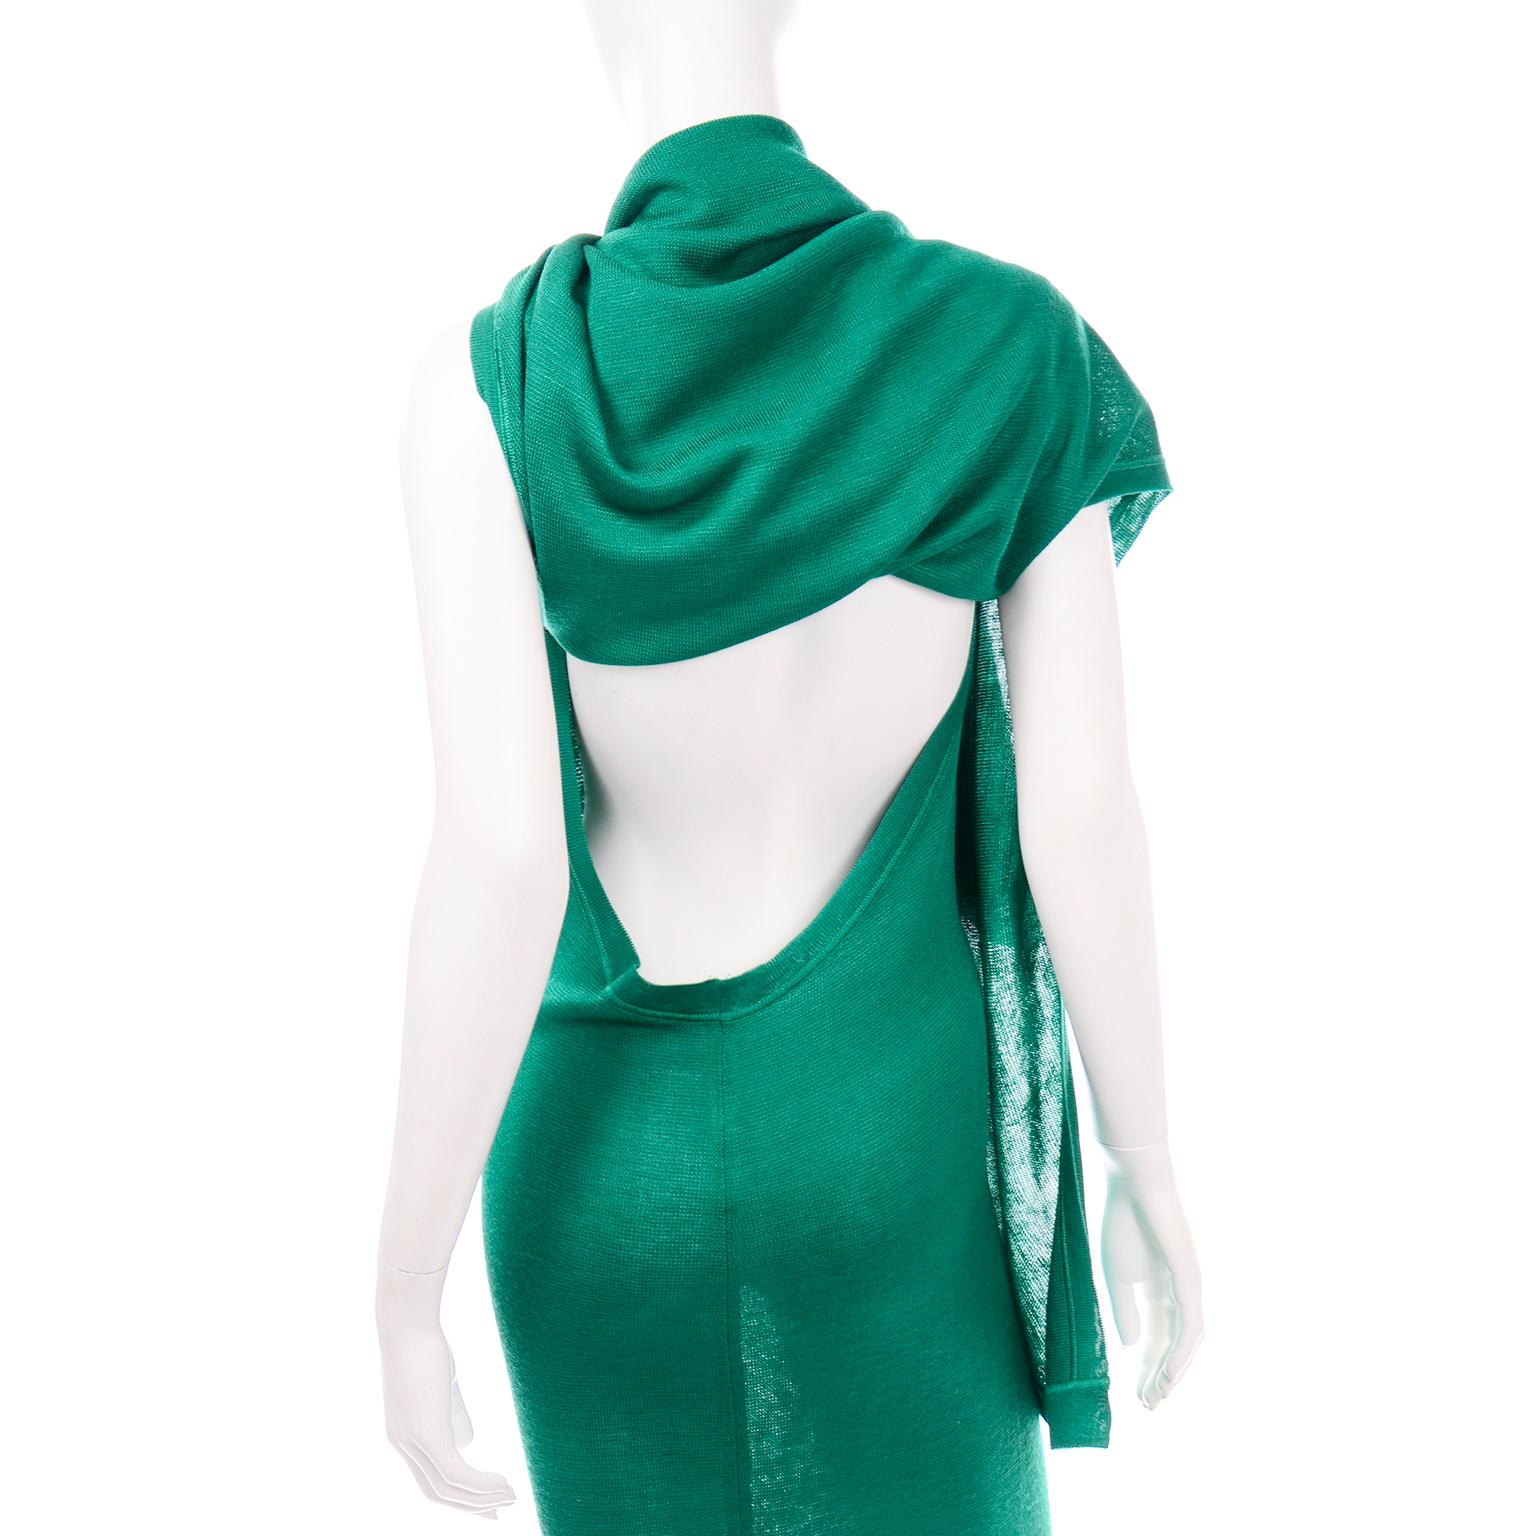 Angelo Tarlazzi Paris Vintage Emerald Green Stretch Knit Dress W Drape Wrap For Sale 6